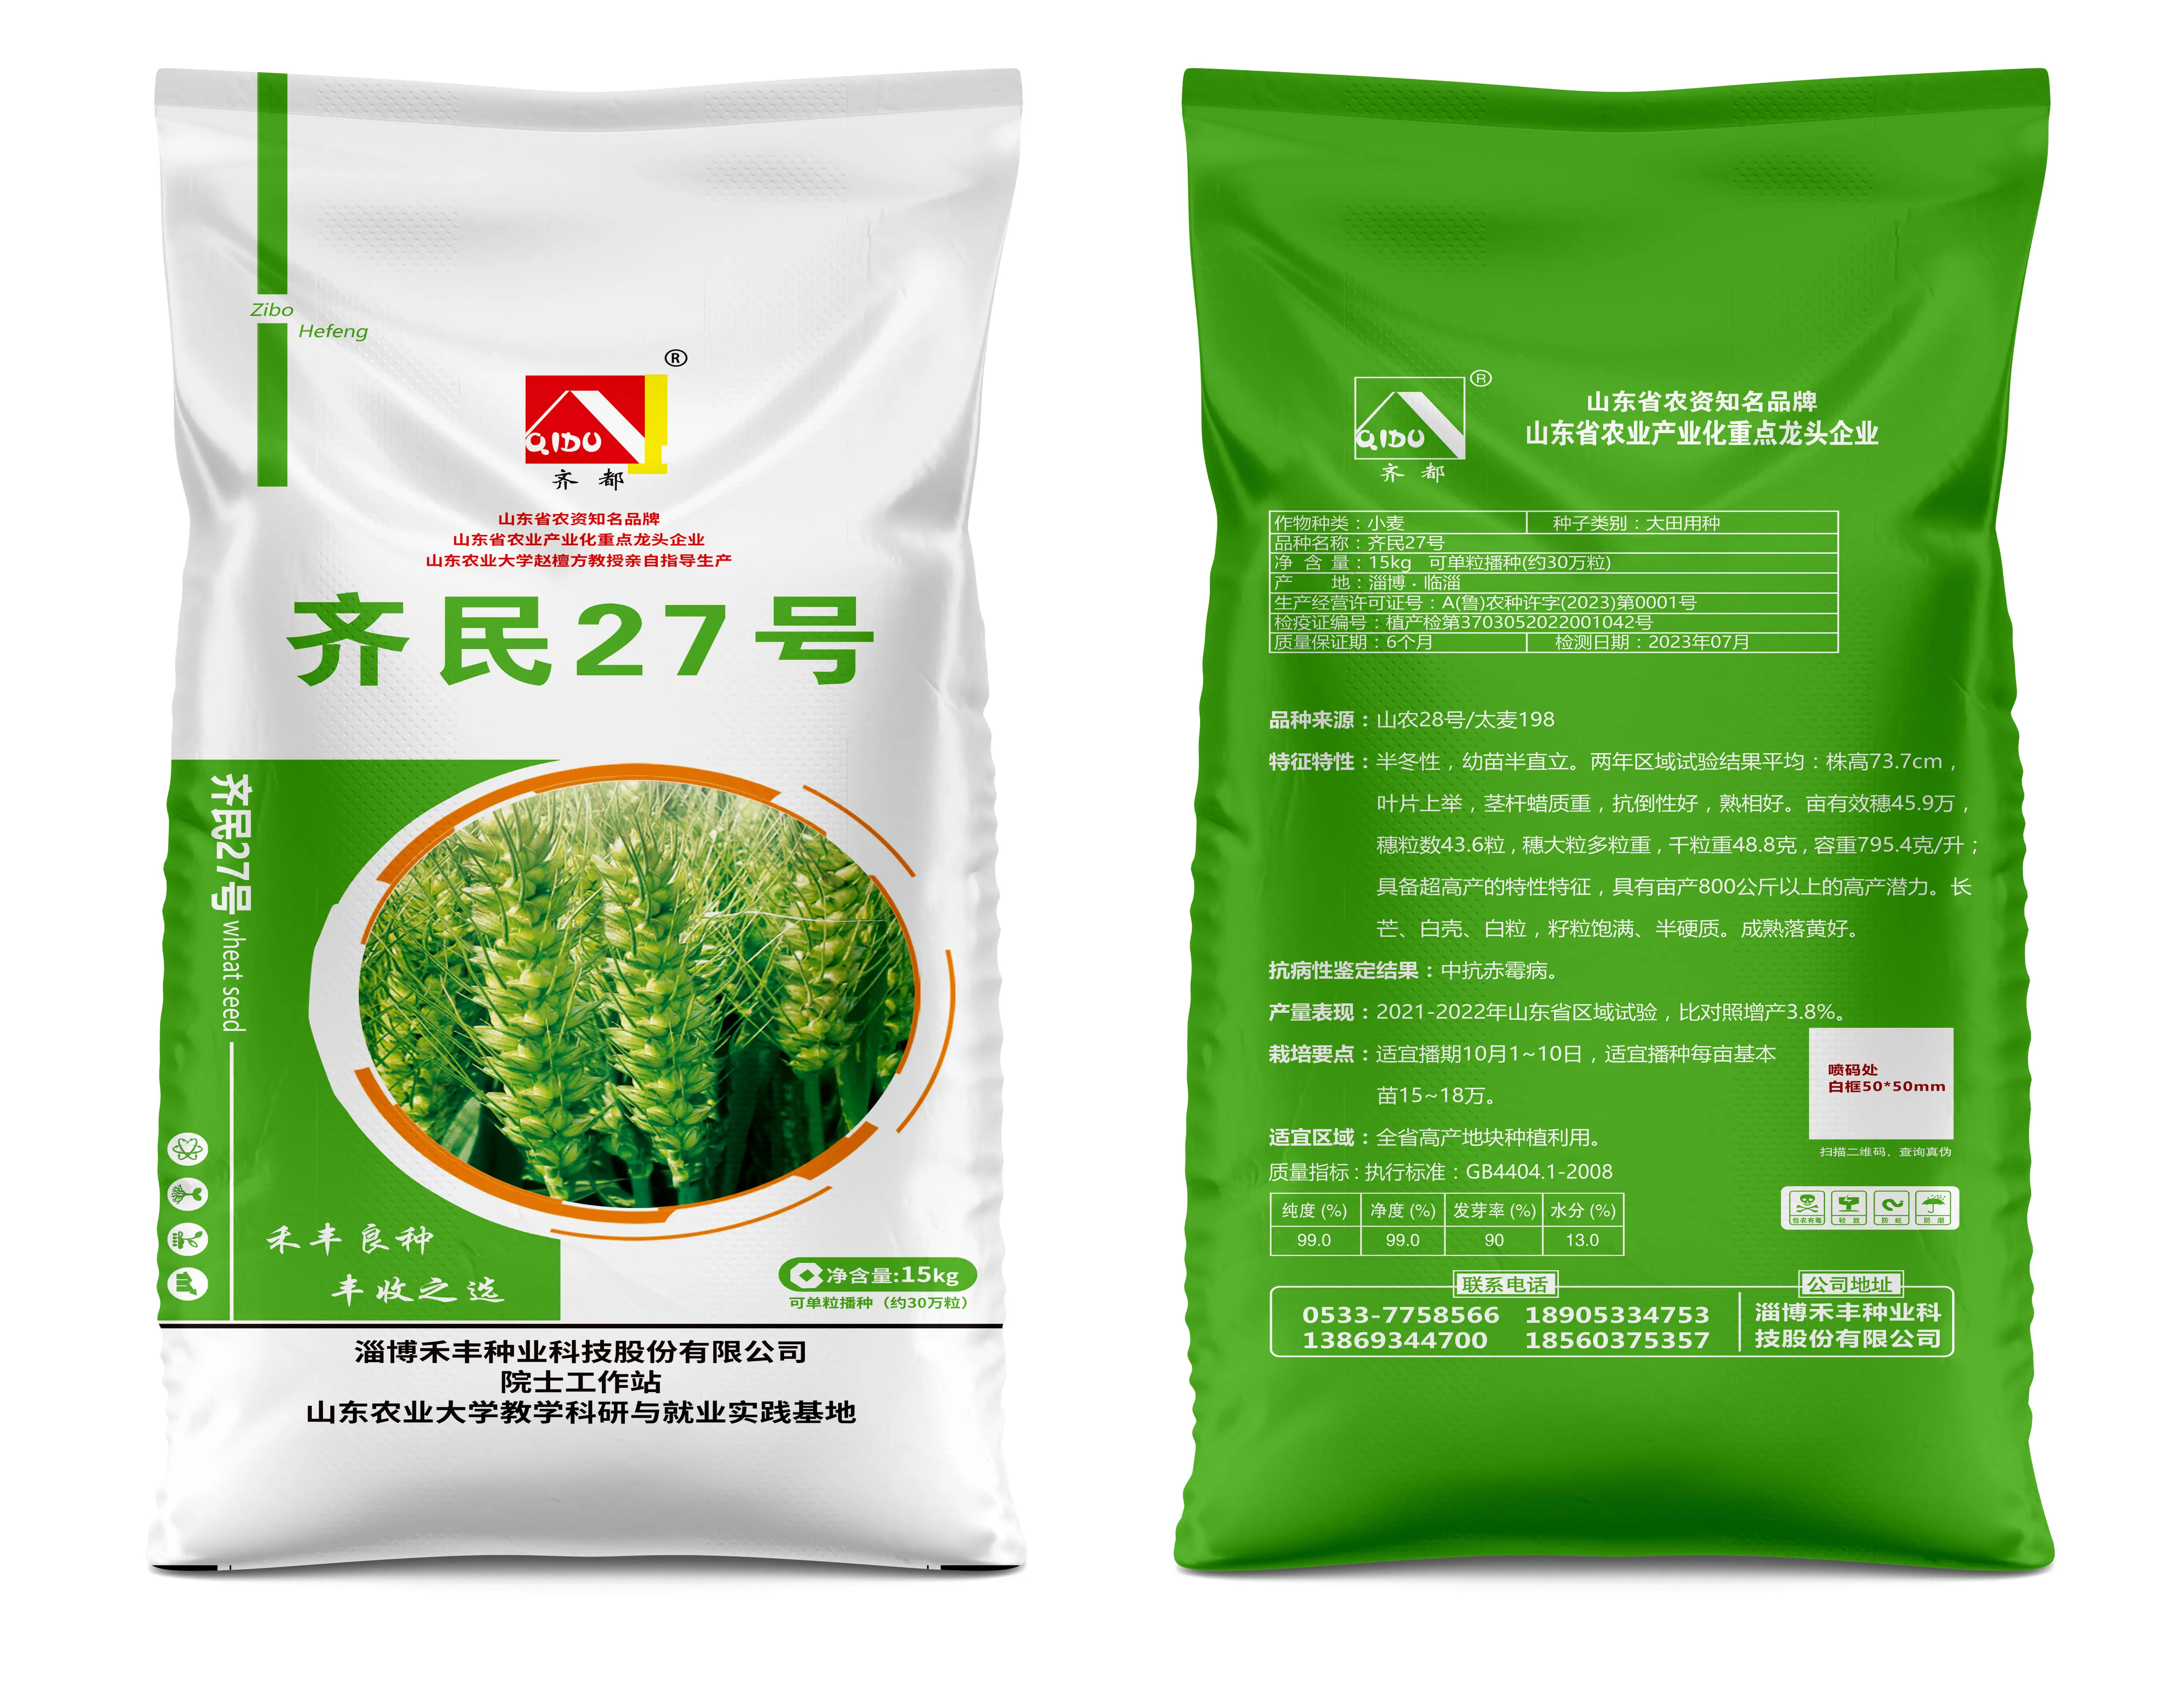 Factory Price PP Woven Sack Plastic 50kg PP Woven Bag Construction Bag For Seeds Grain Rice Flour PP Woven Bag